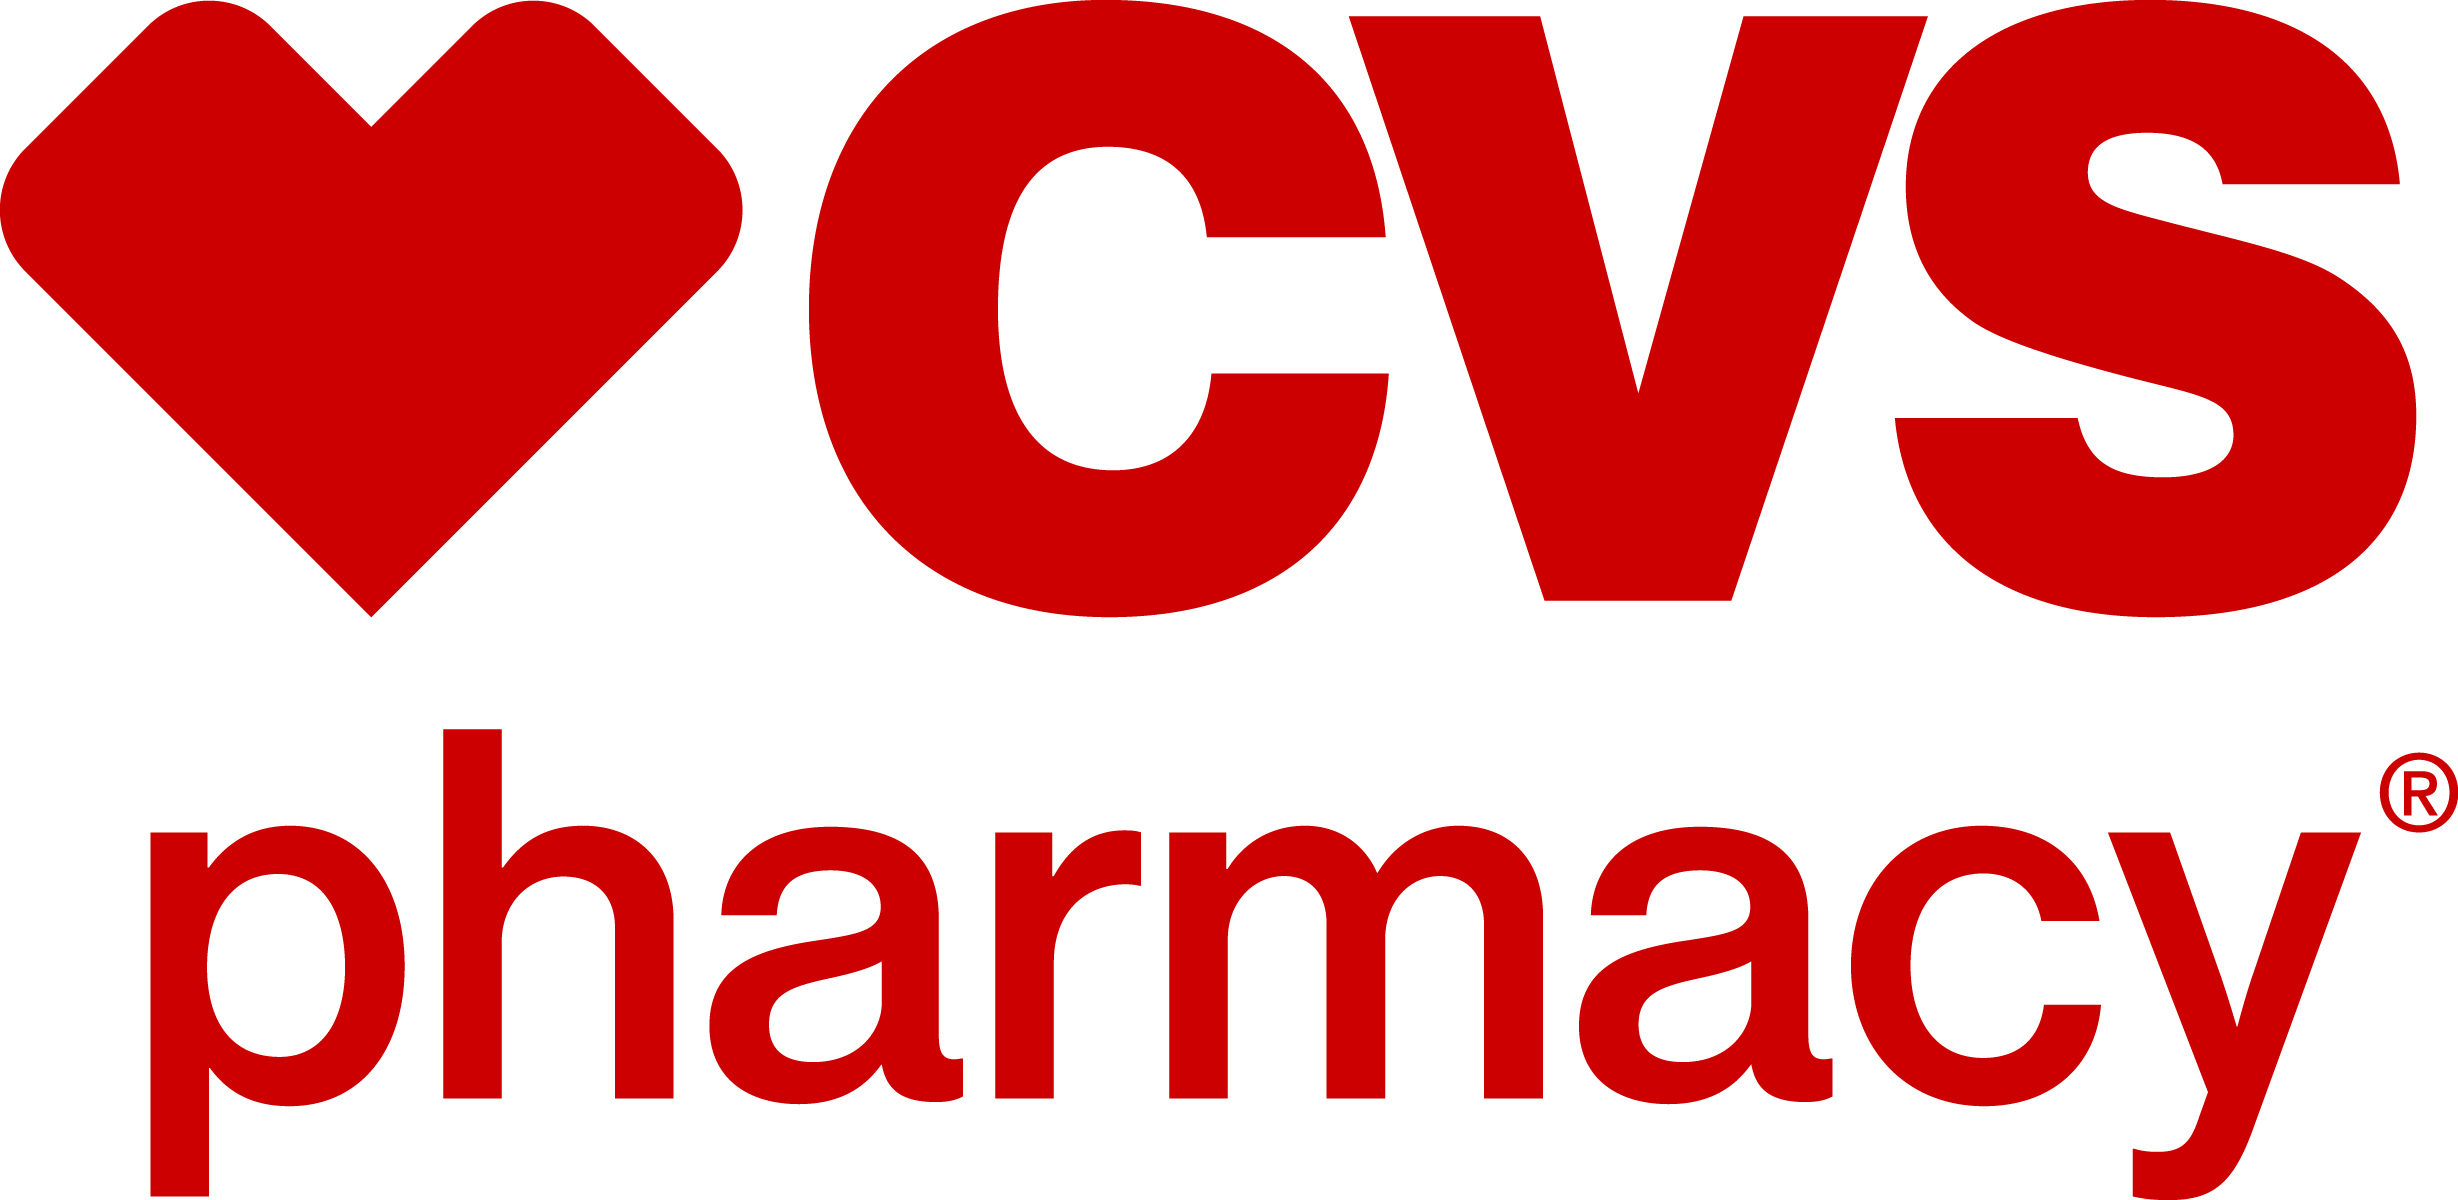 CVS_Pharmacy